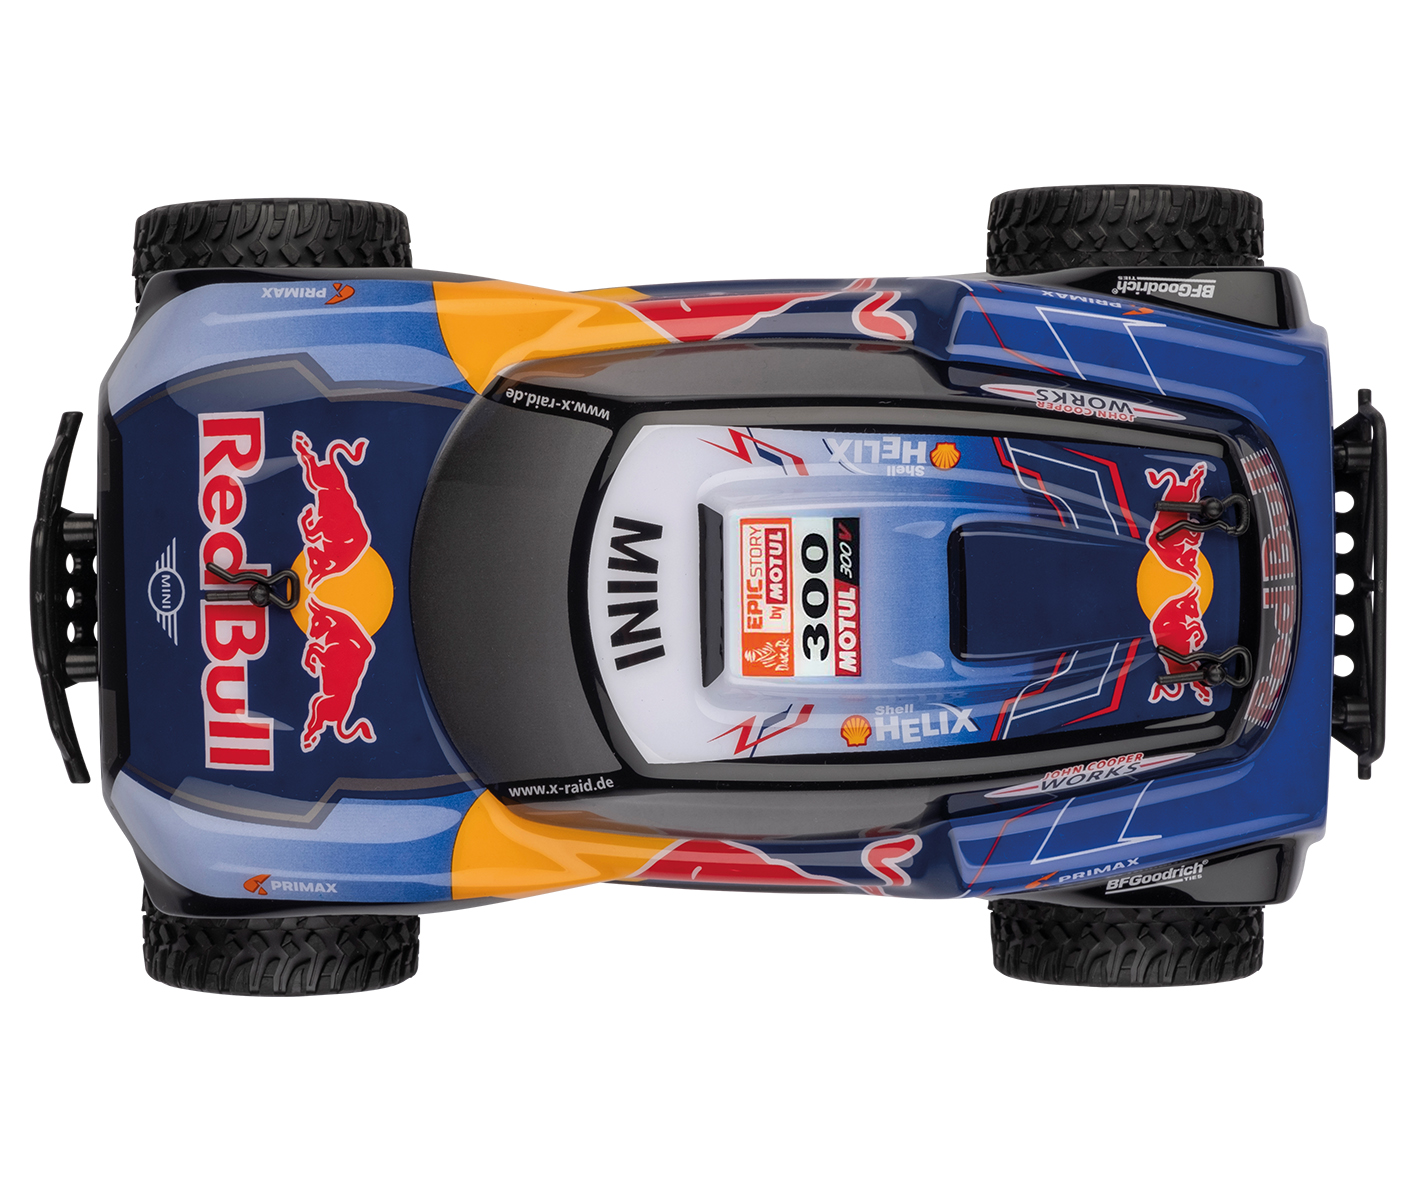 MINI John Cooper Works "Red Bull" - Fahrzeug - ferngesteuert 